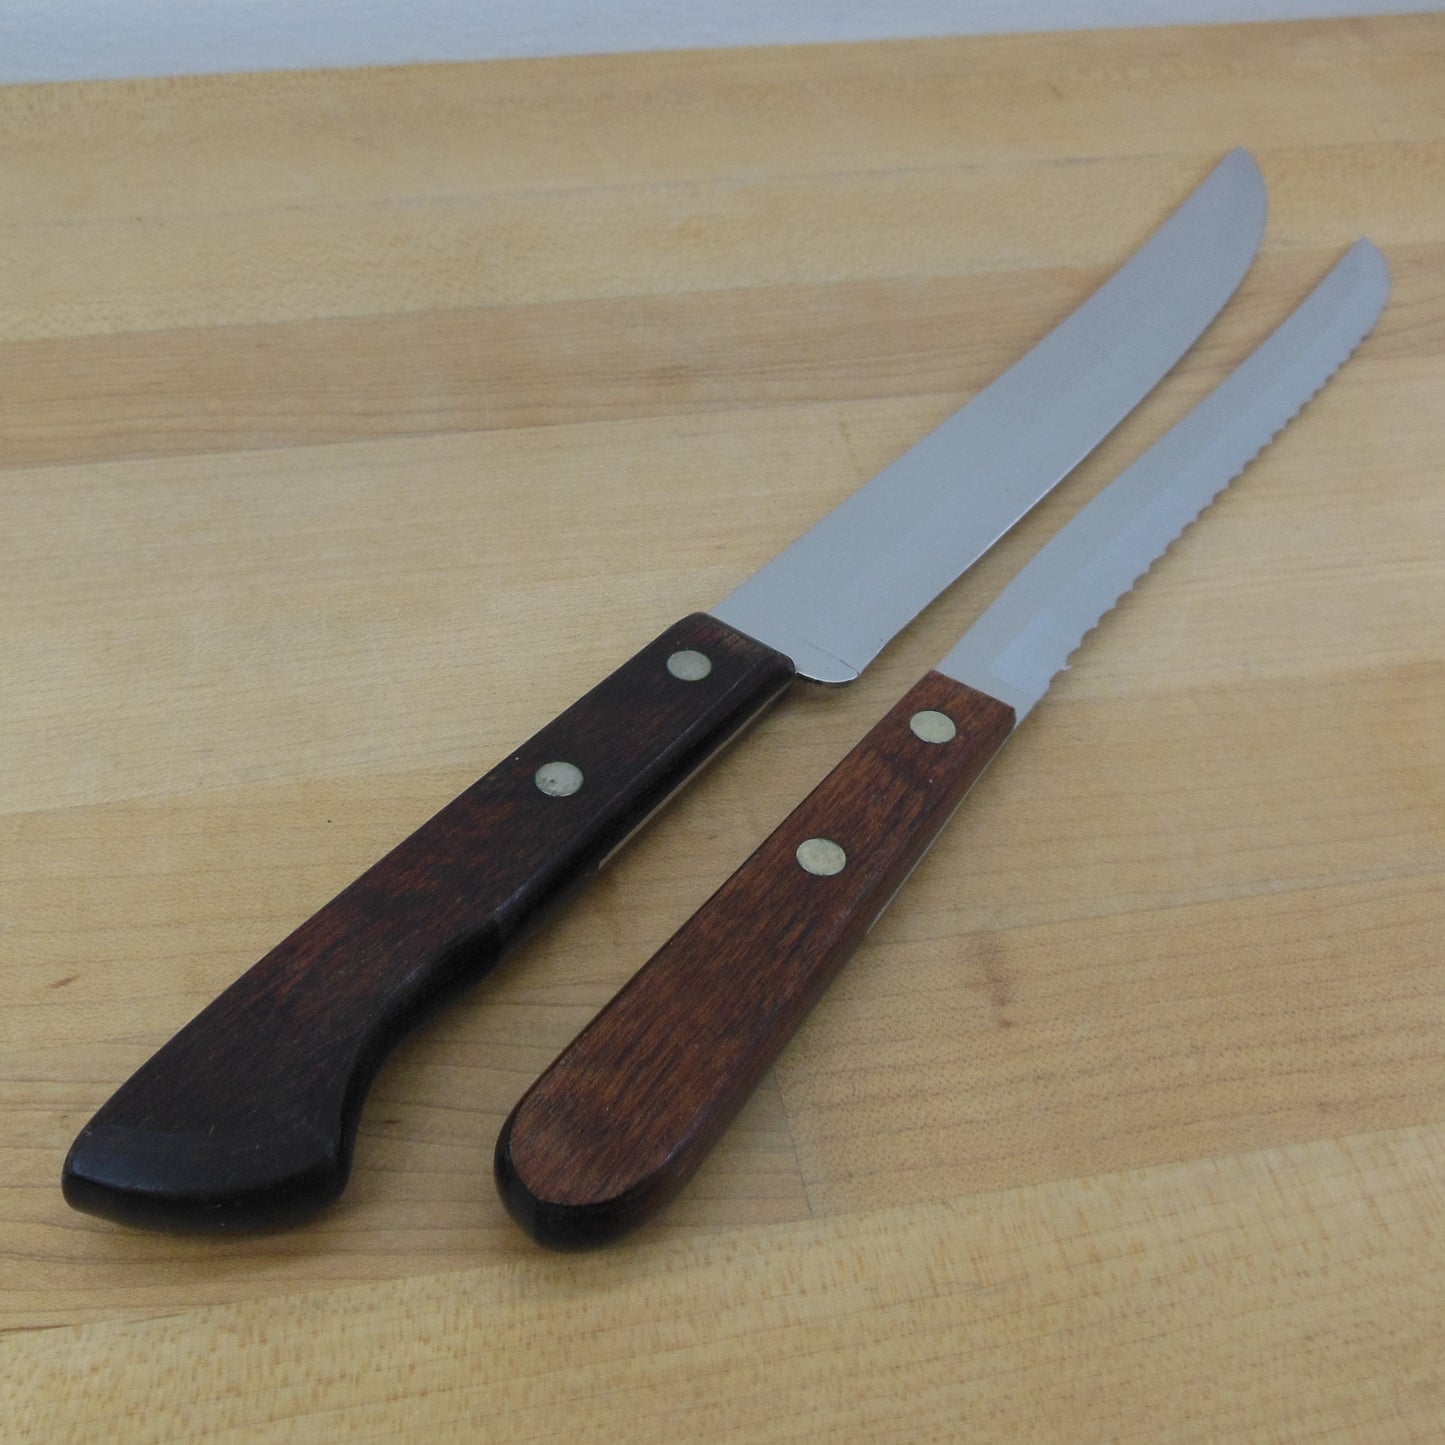 Ekco Flint & Oneida Slicing Kitchen Knives 7" 8" Wood Handle Stainless Steel USA